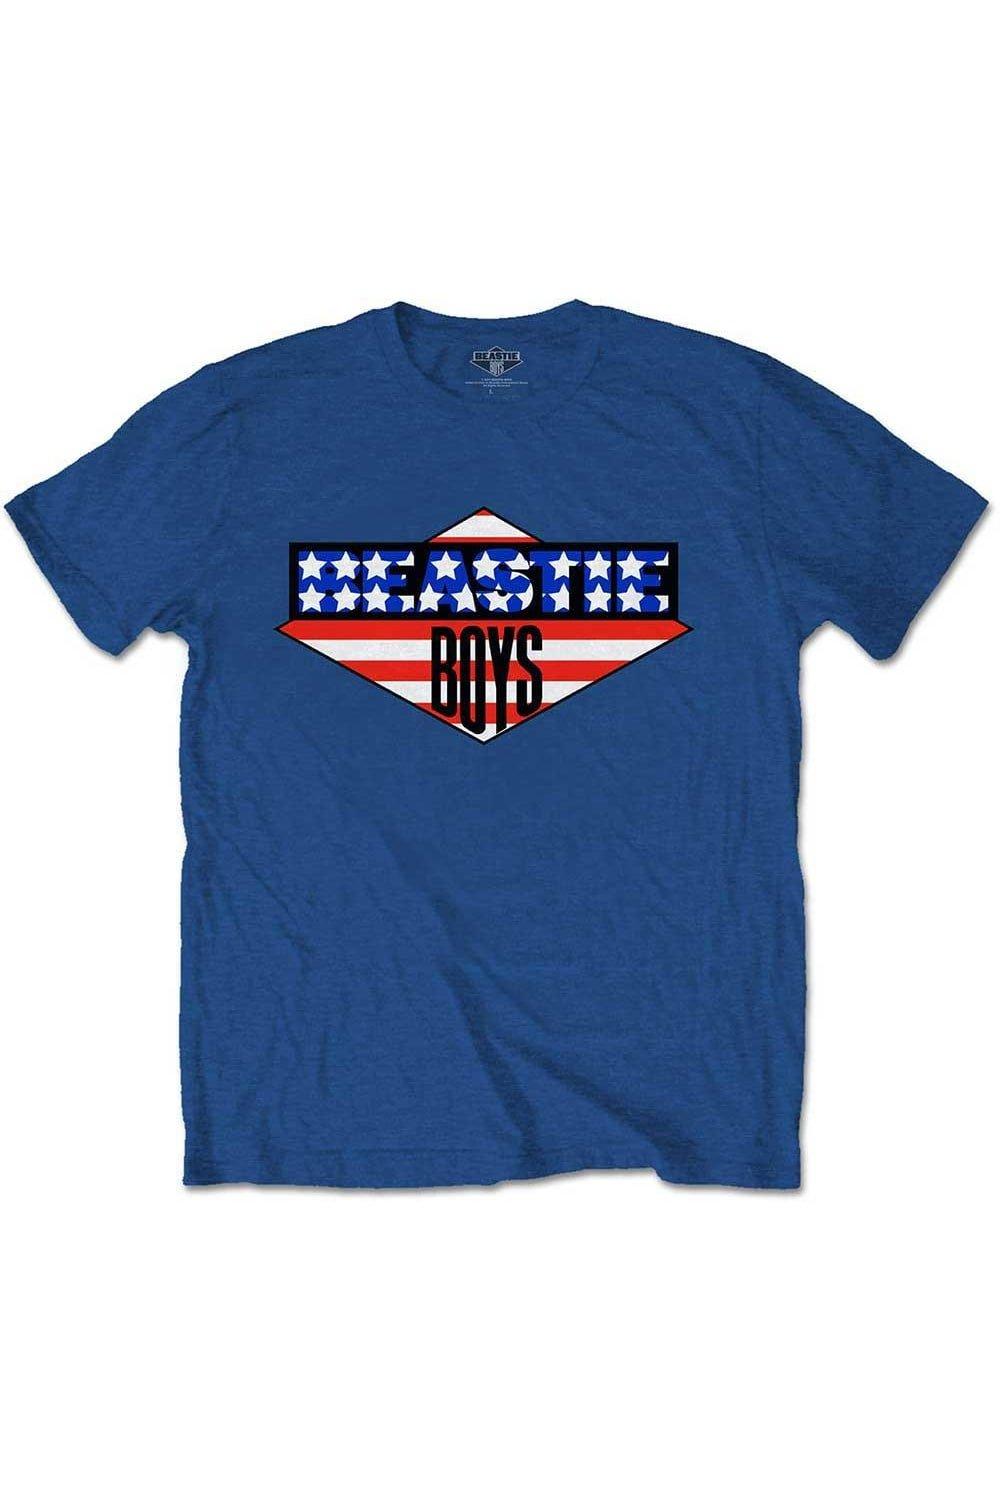 Хлопковая футболка с американским флагом Beastie Boys, синий